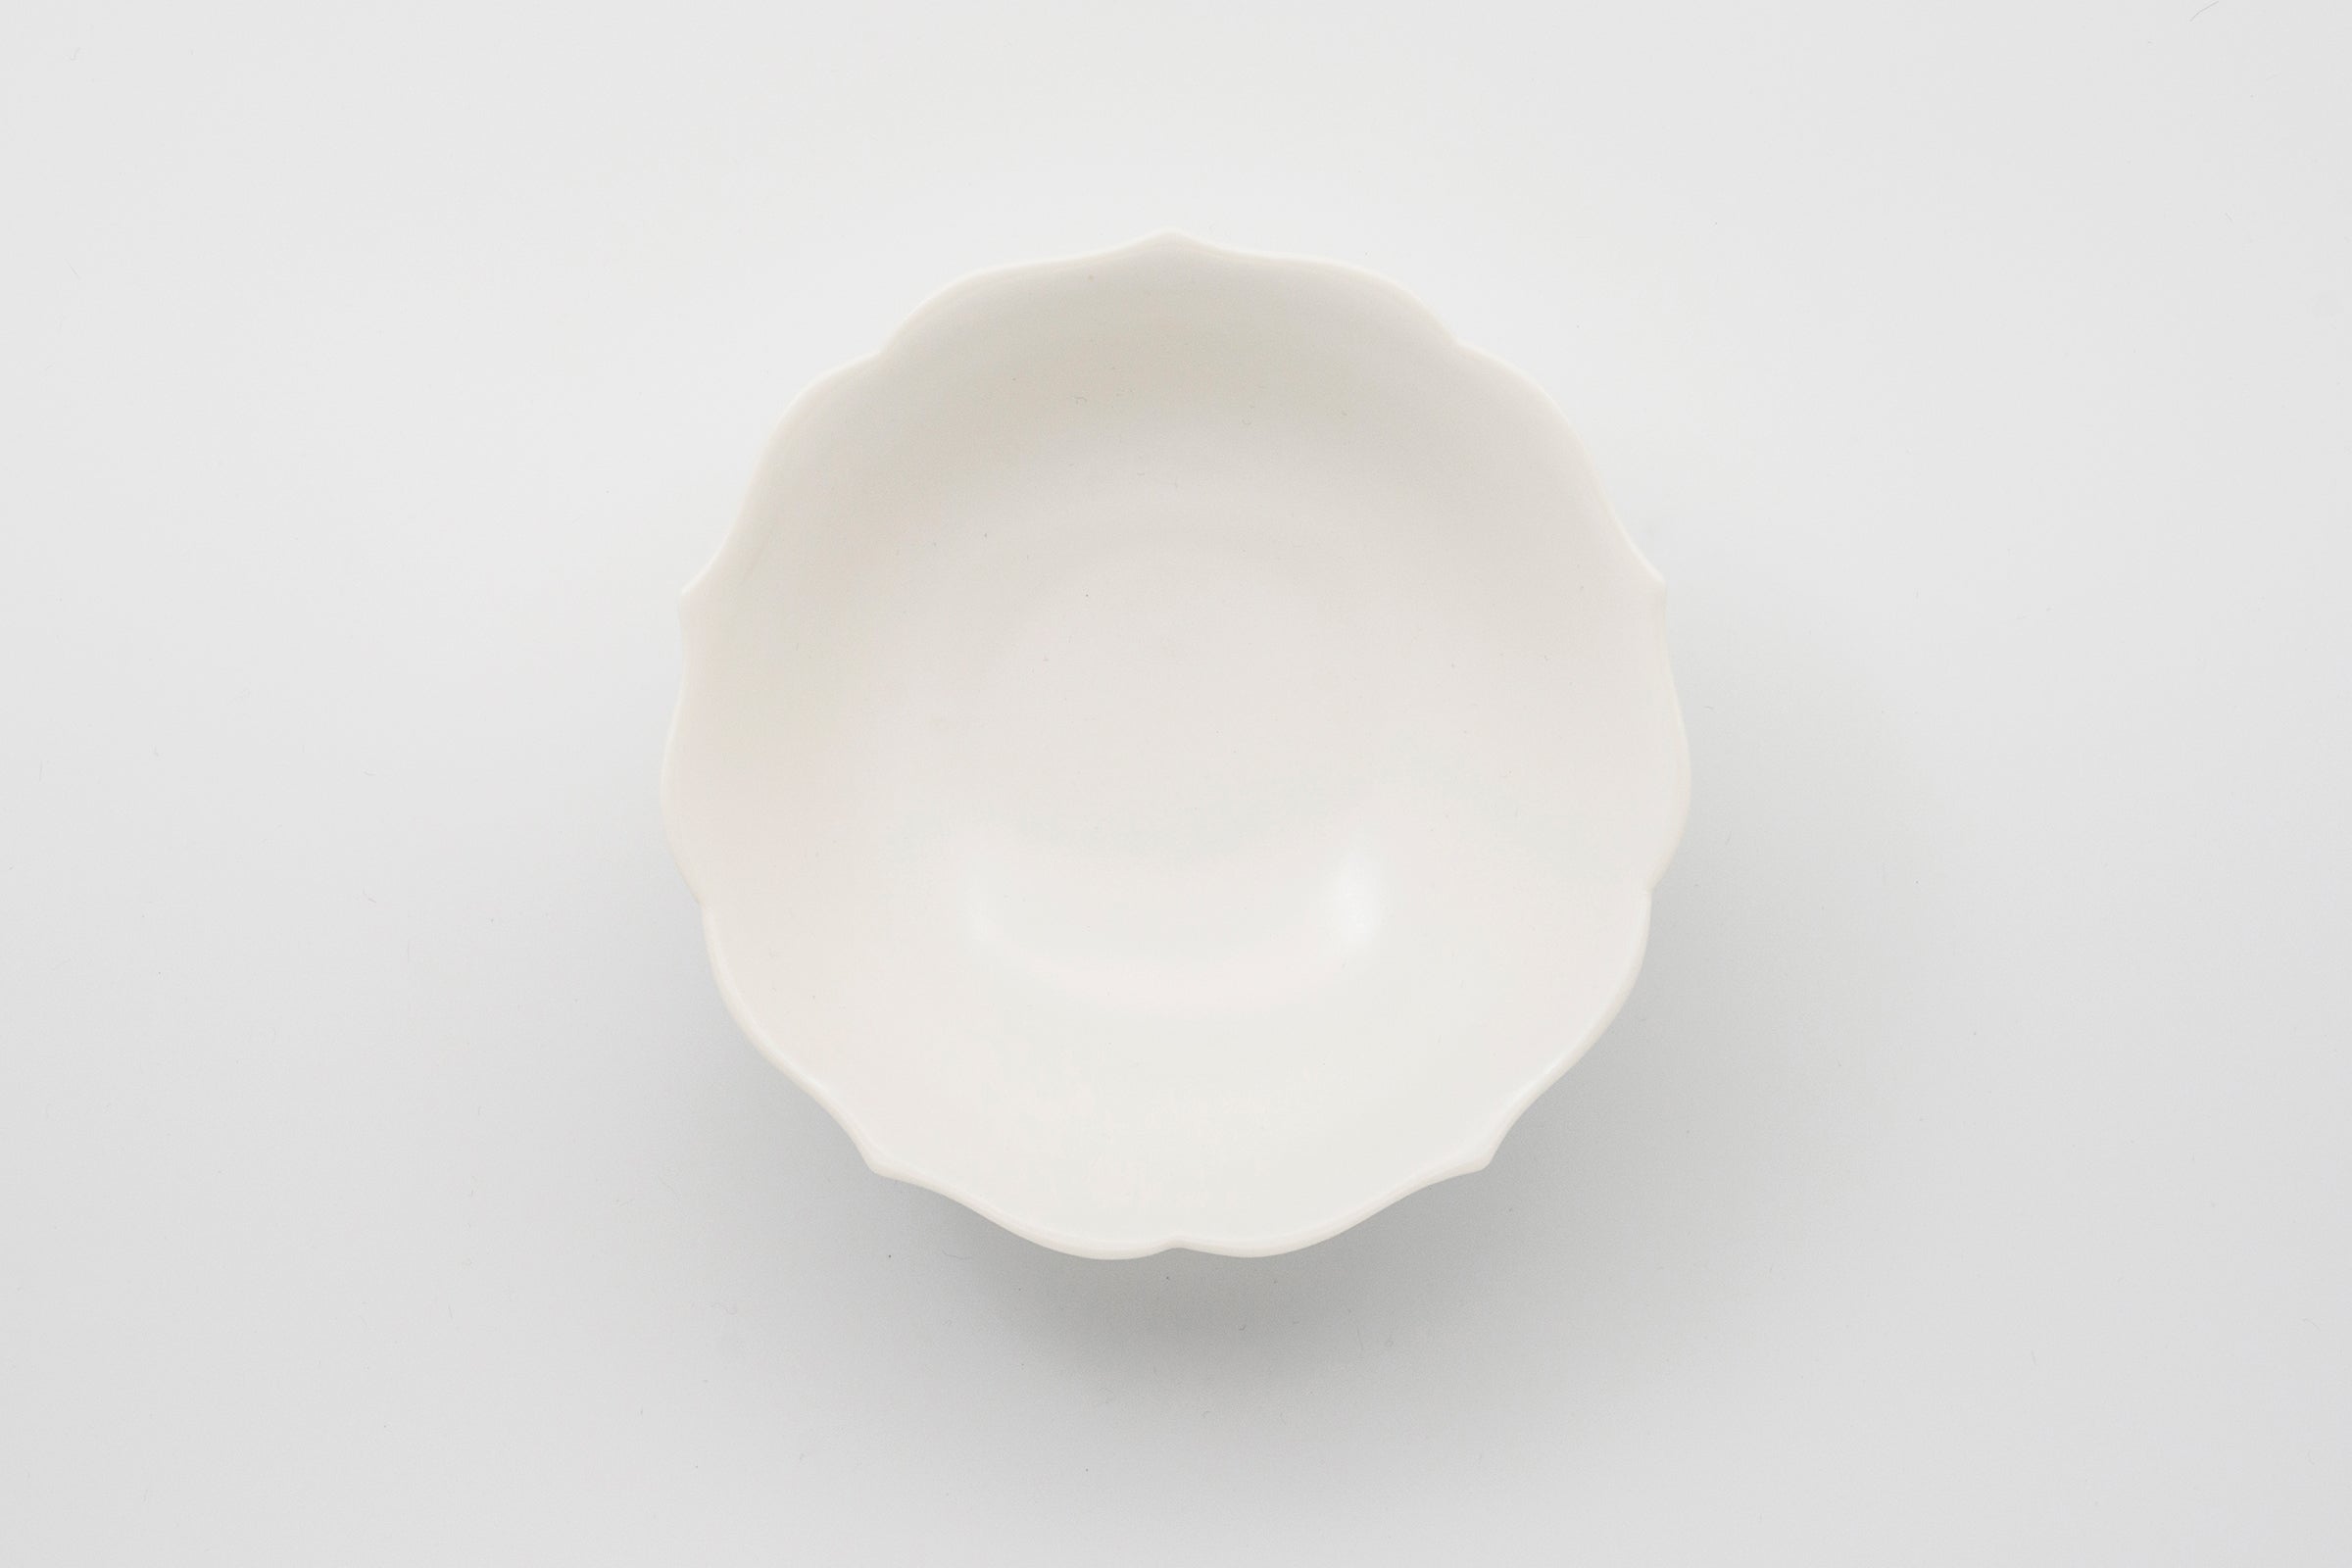 jicon-bellflower-porcelain-ware-bowl-by-sojao